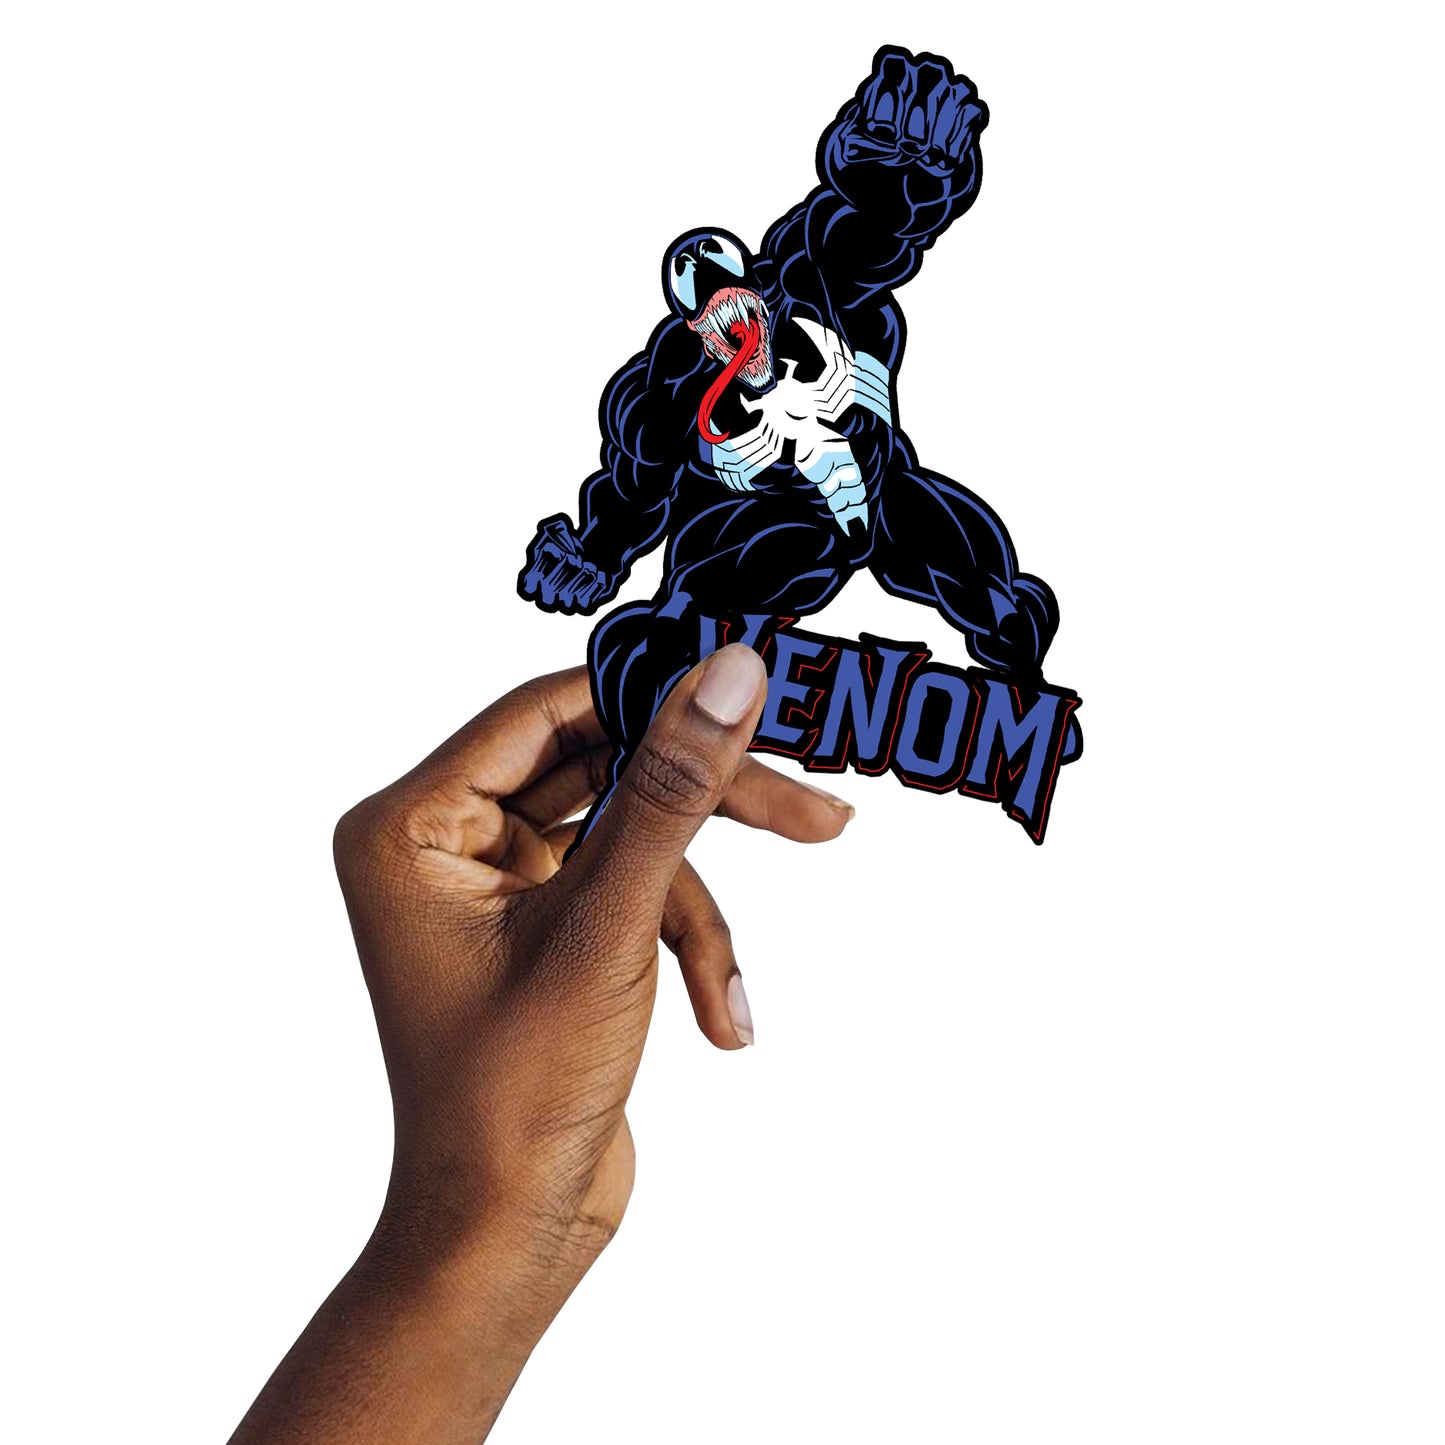 Sheet of 5 -Venom: Venom Retro Minis        - Officially Licensed Marvel Removable     Adhesive Decal